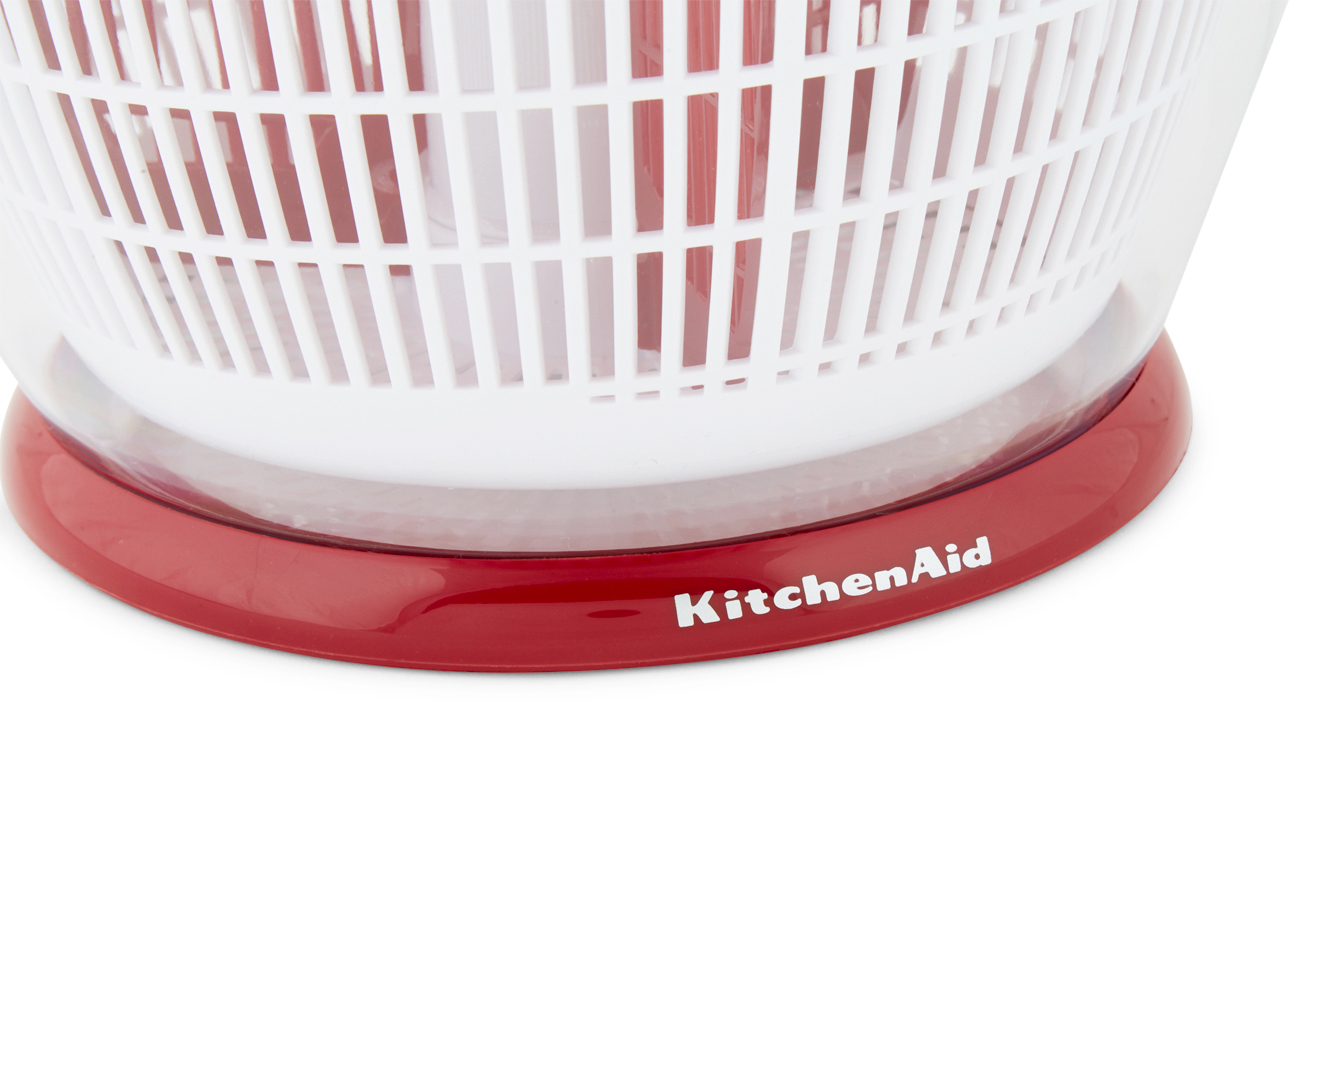 KitchenAid Salad Spinner Red